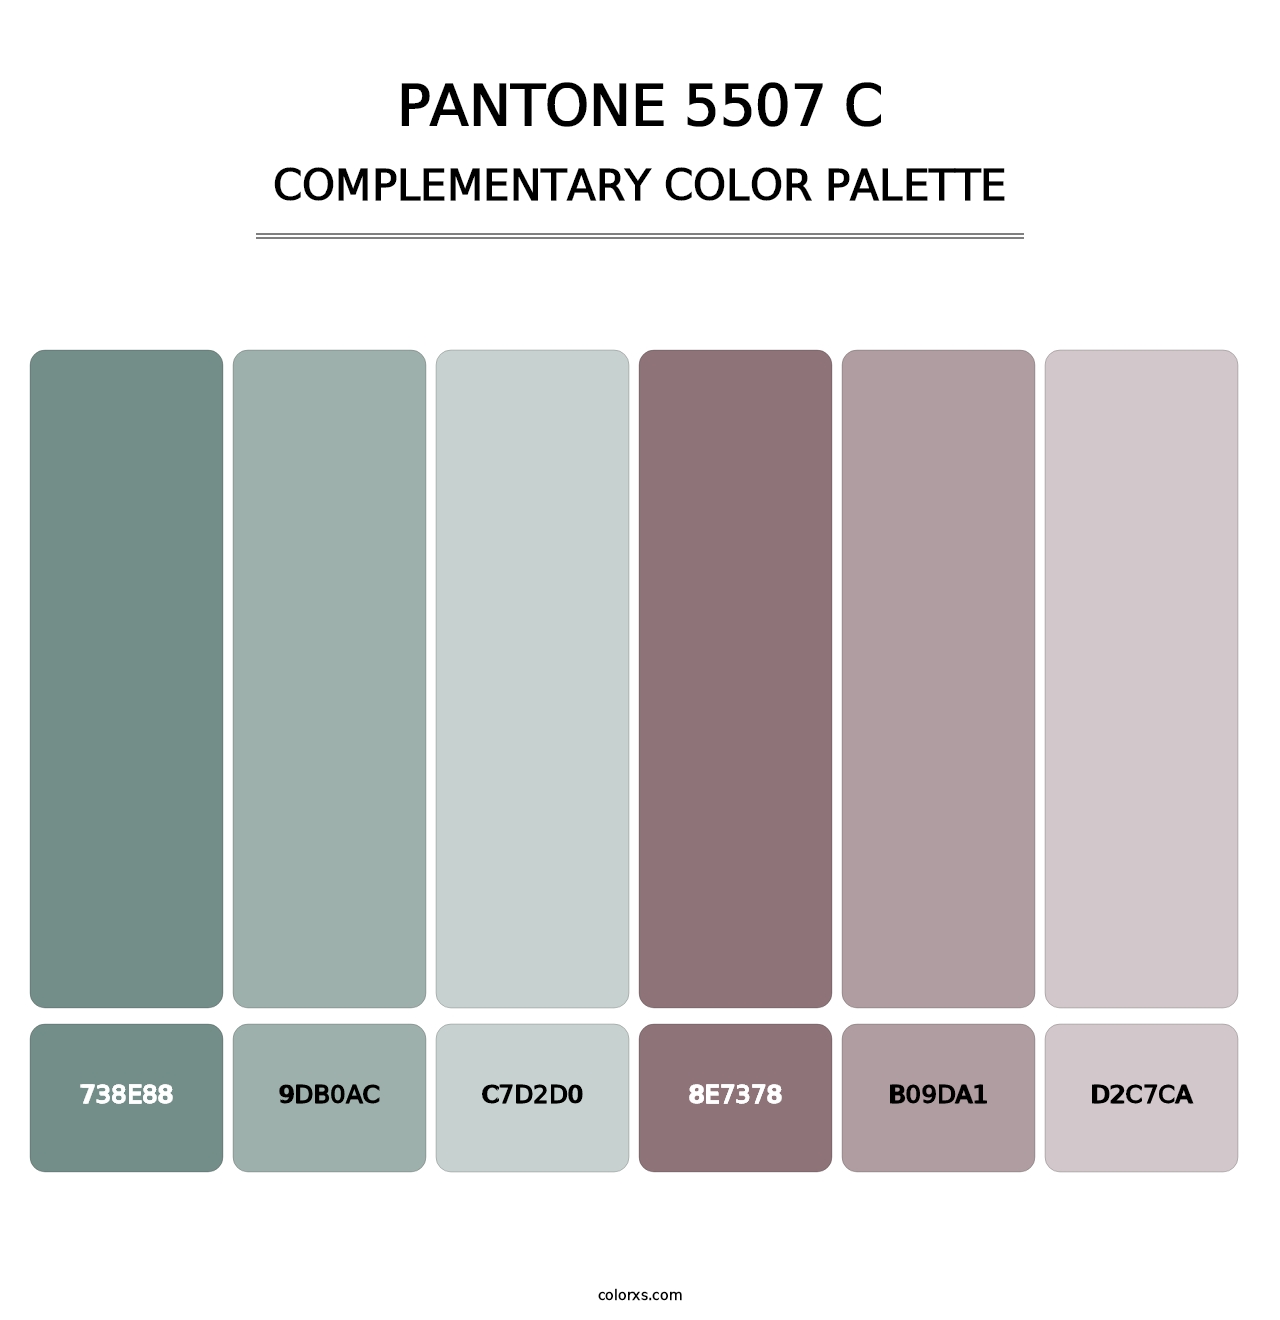 PANTONE 5507 C - Complementary Color Palette